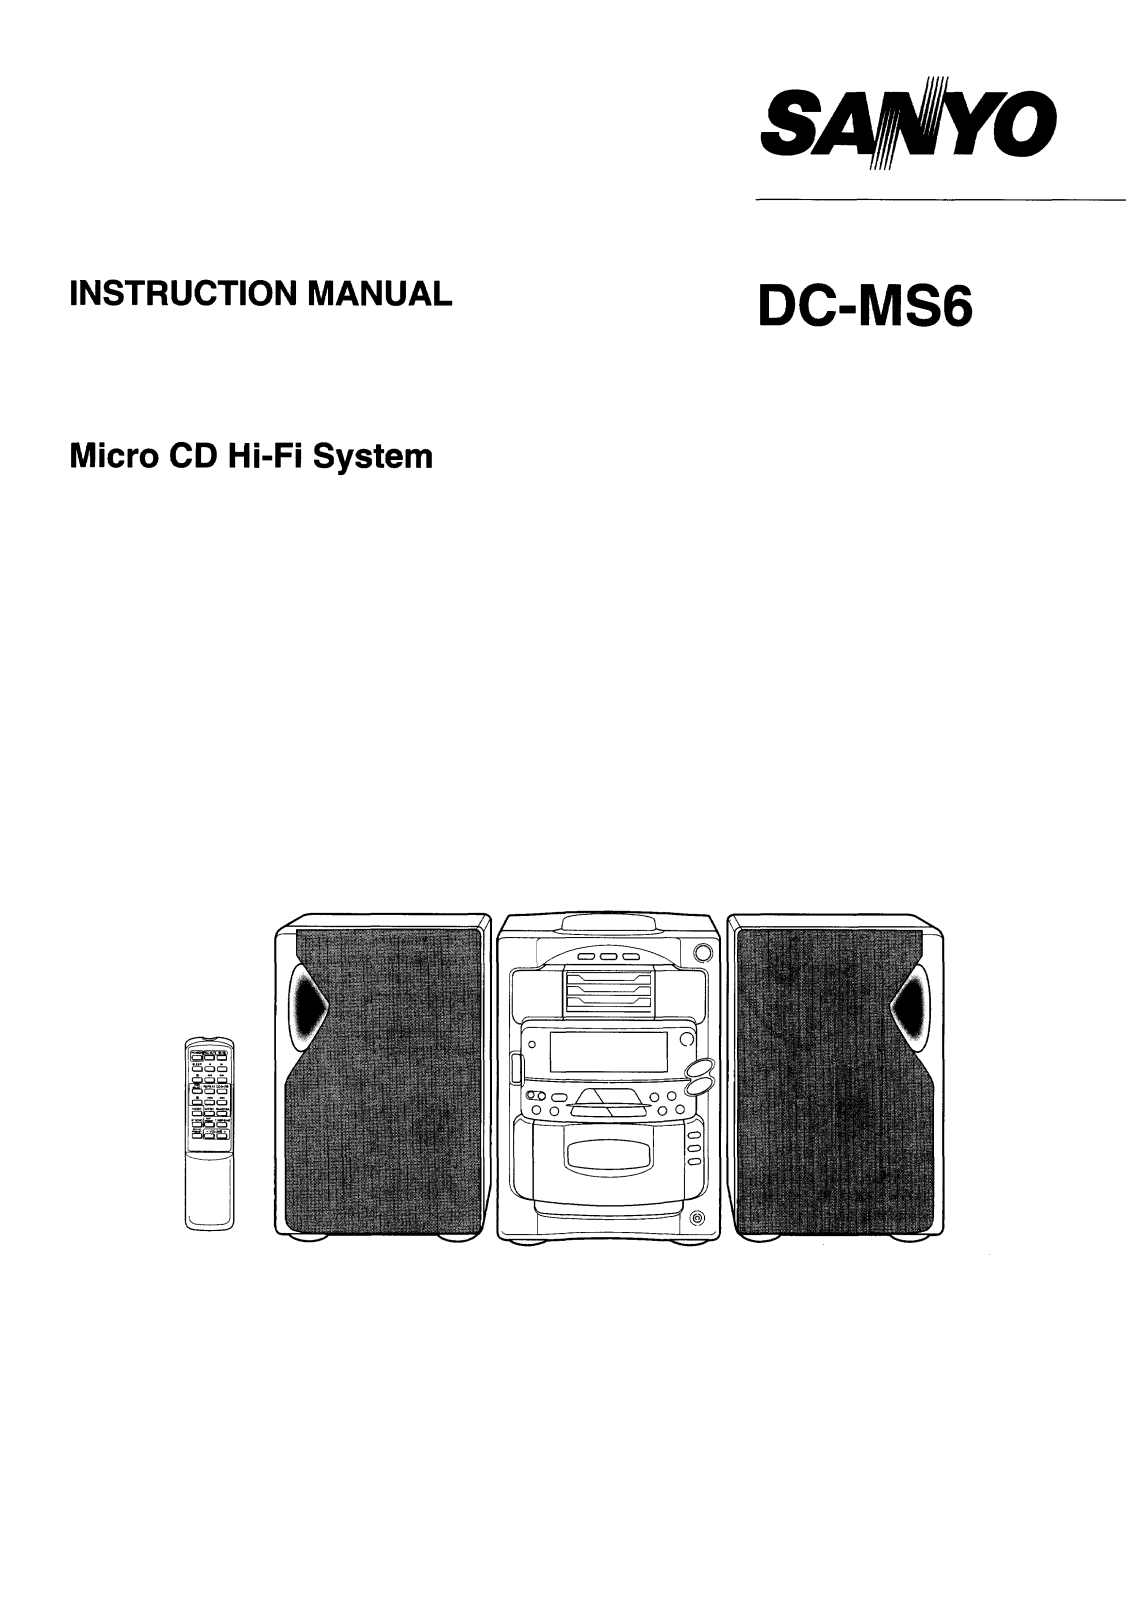 Sanyo DC-MS6 Instruction Manual